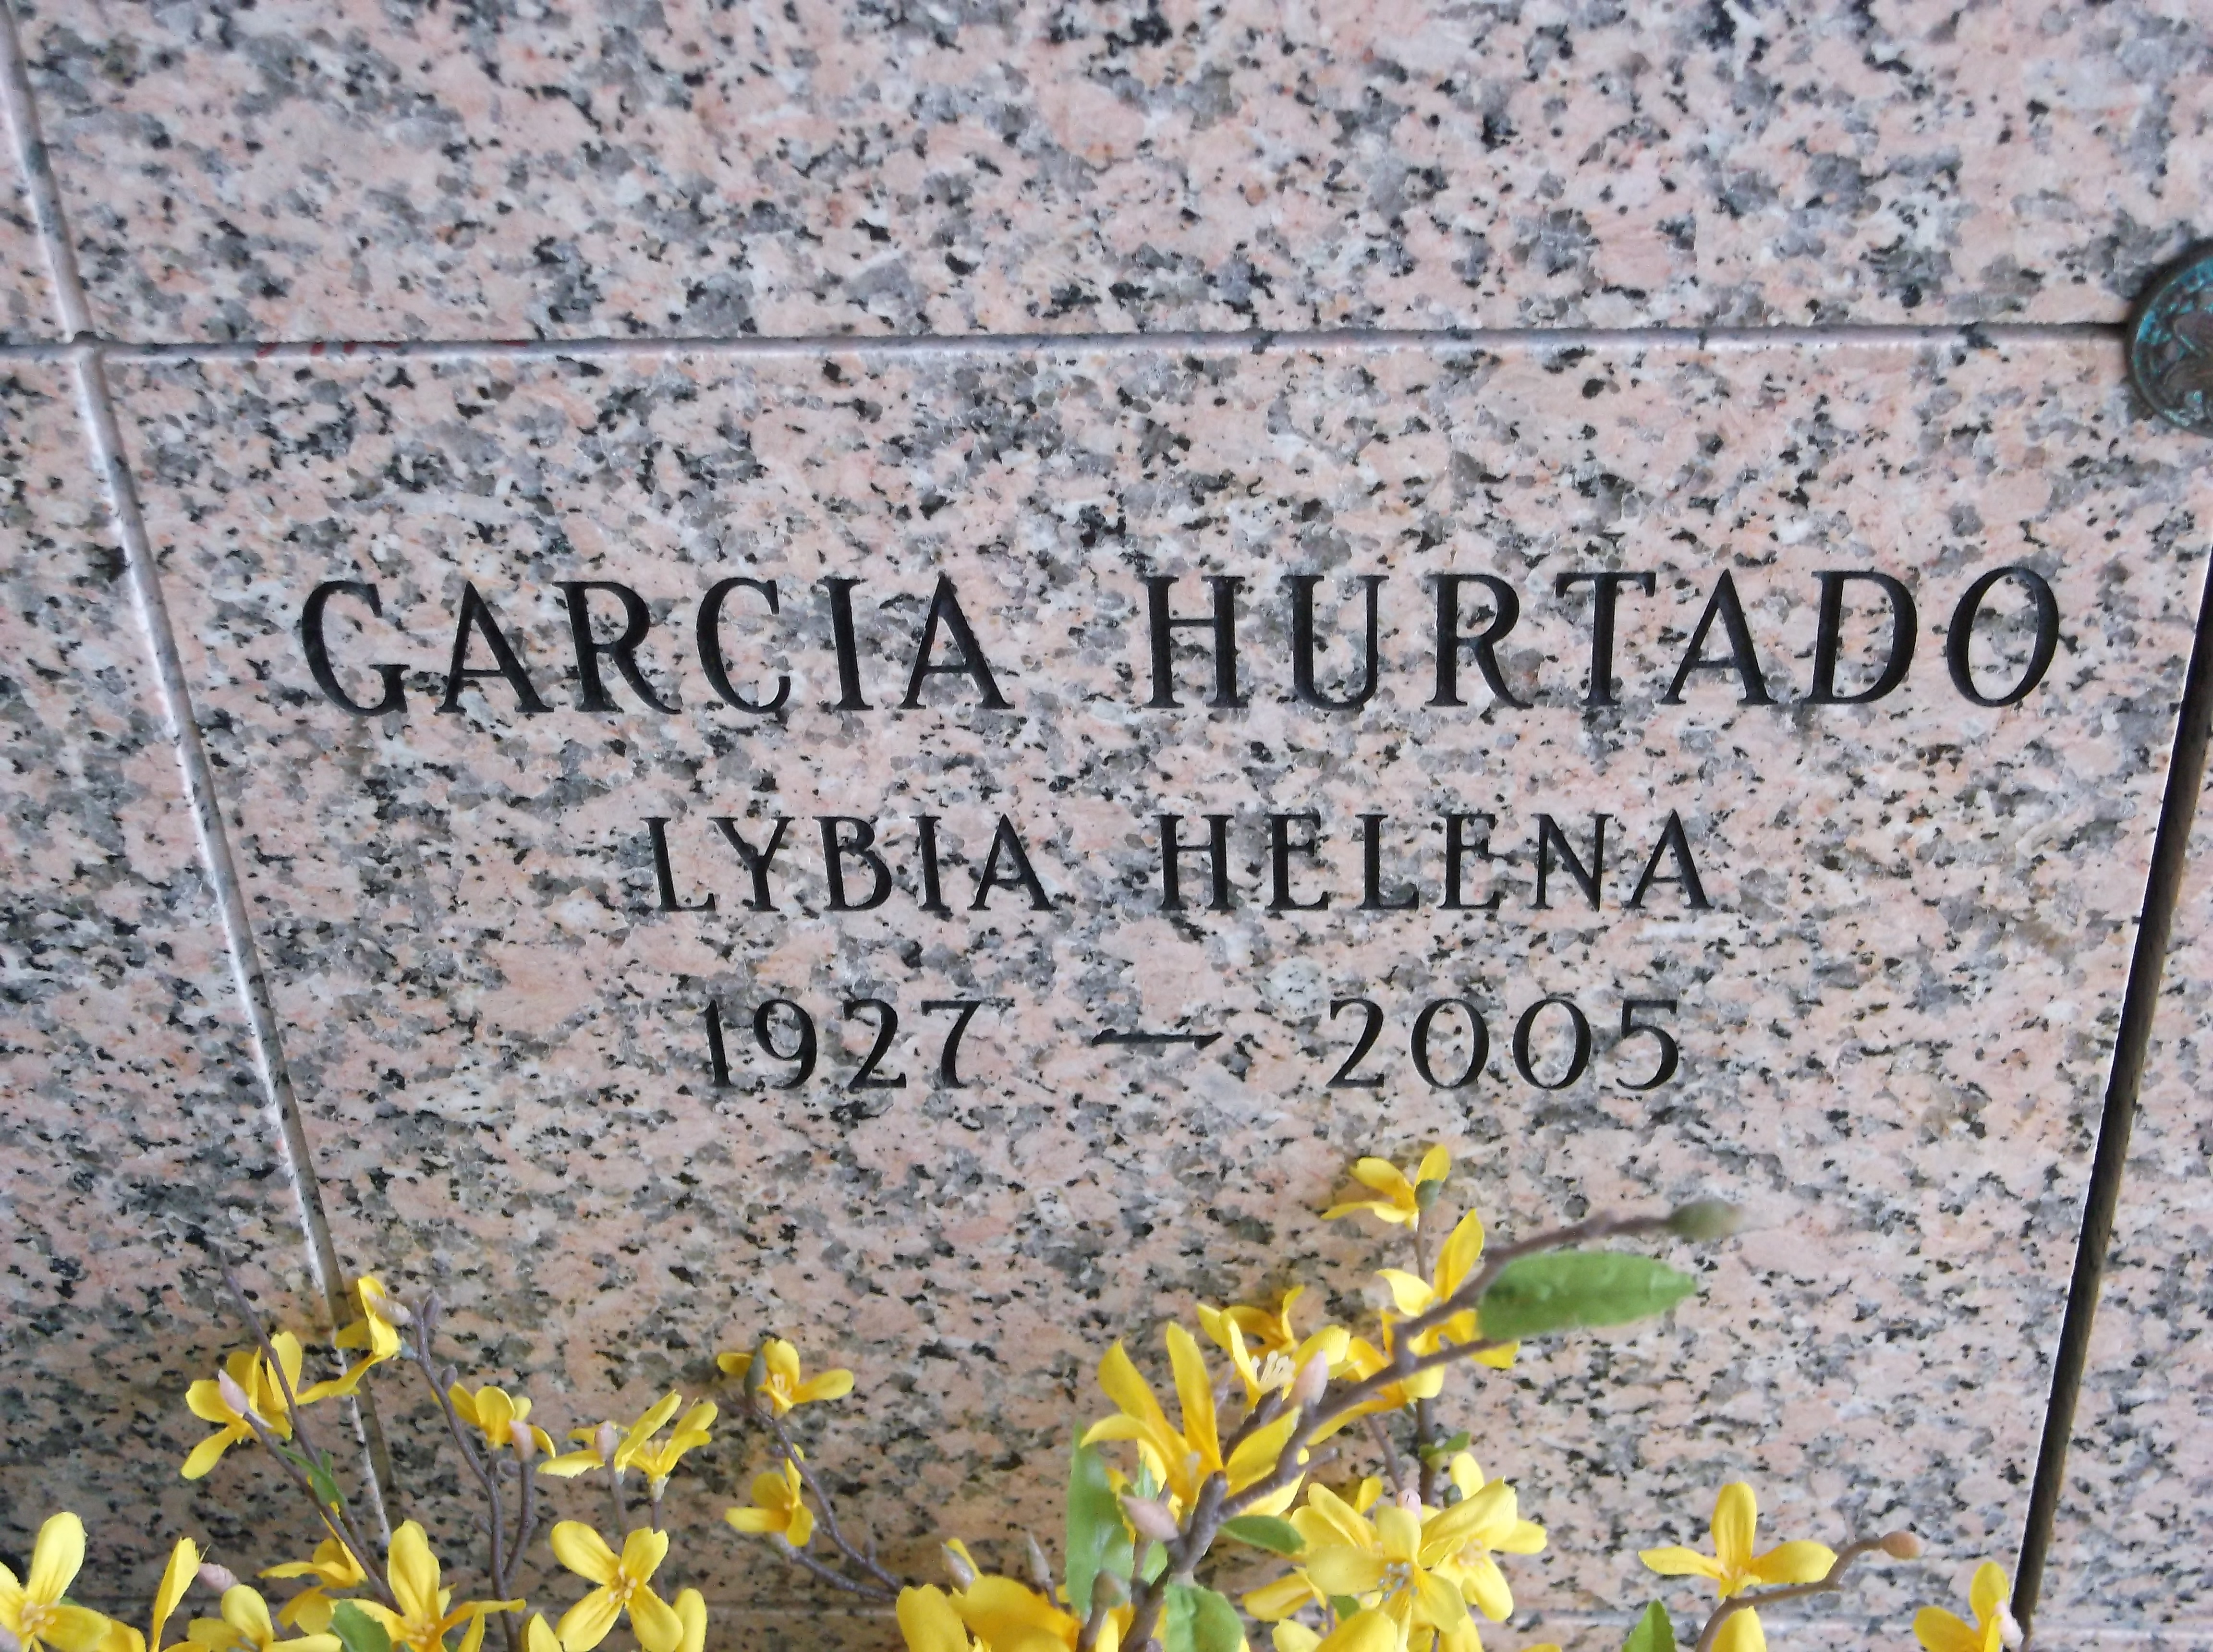 Lybia Helena Garcia Hurtado